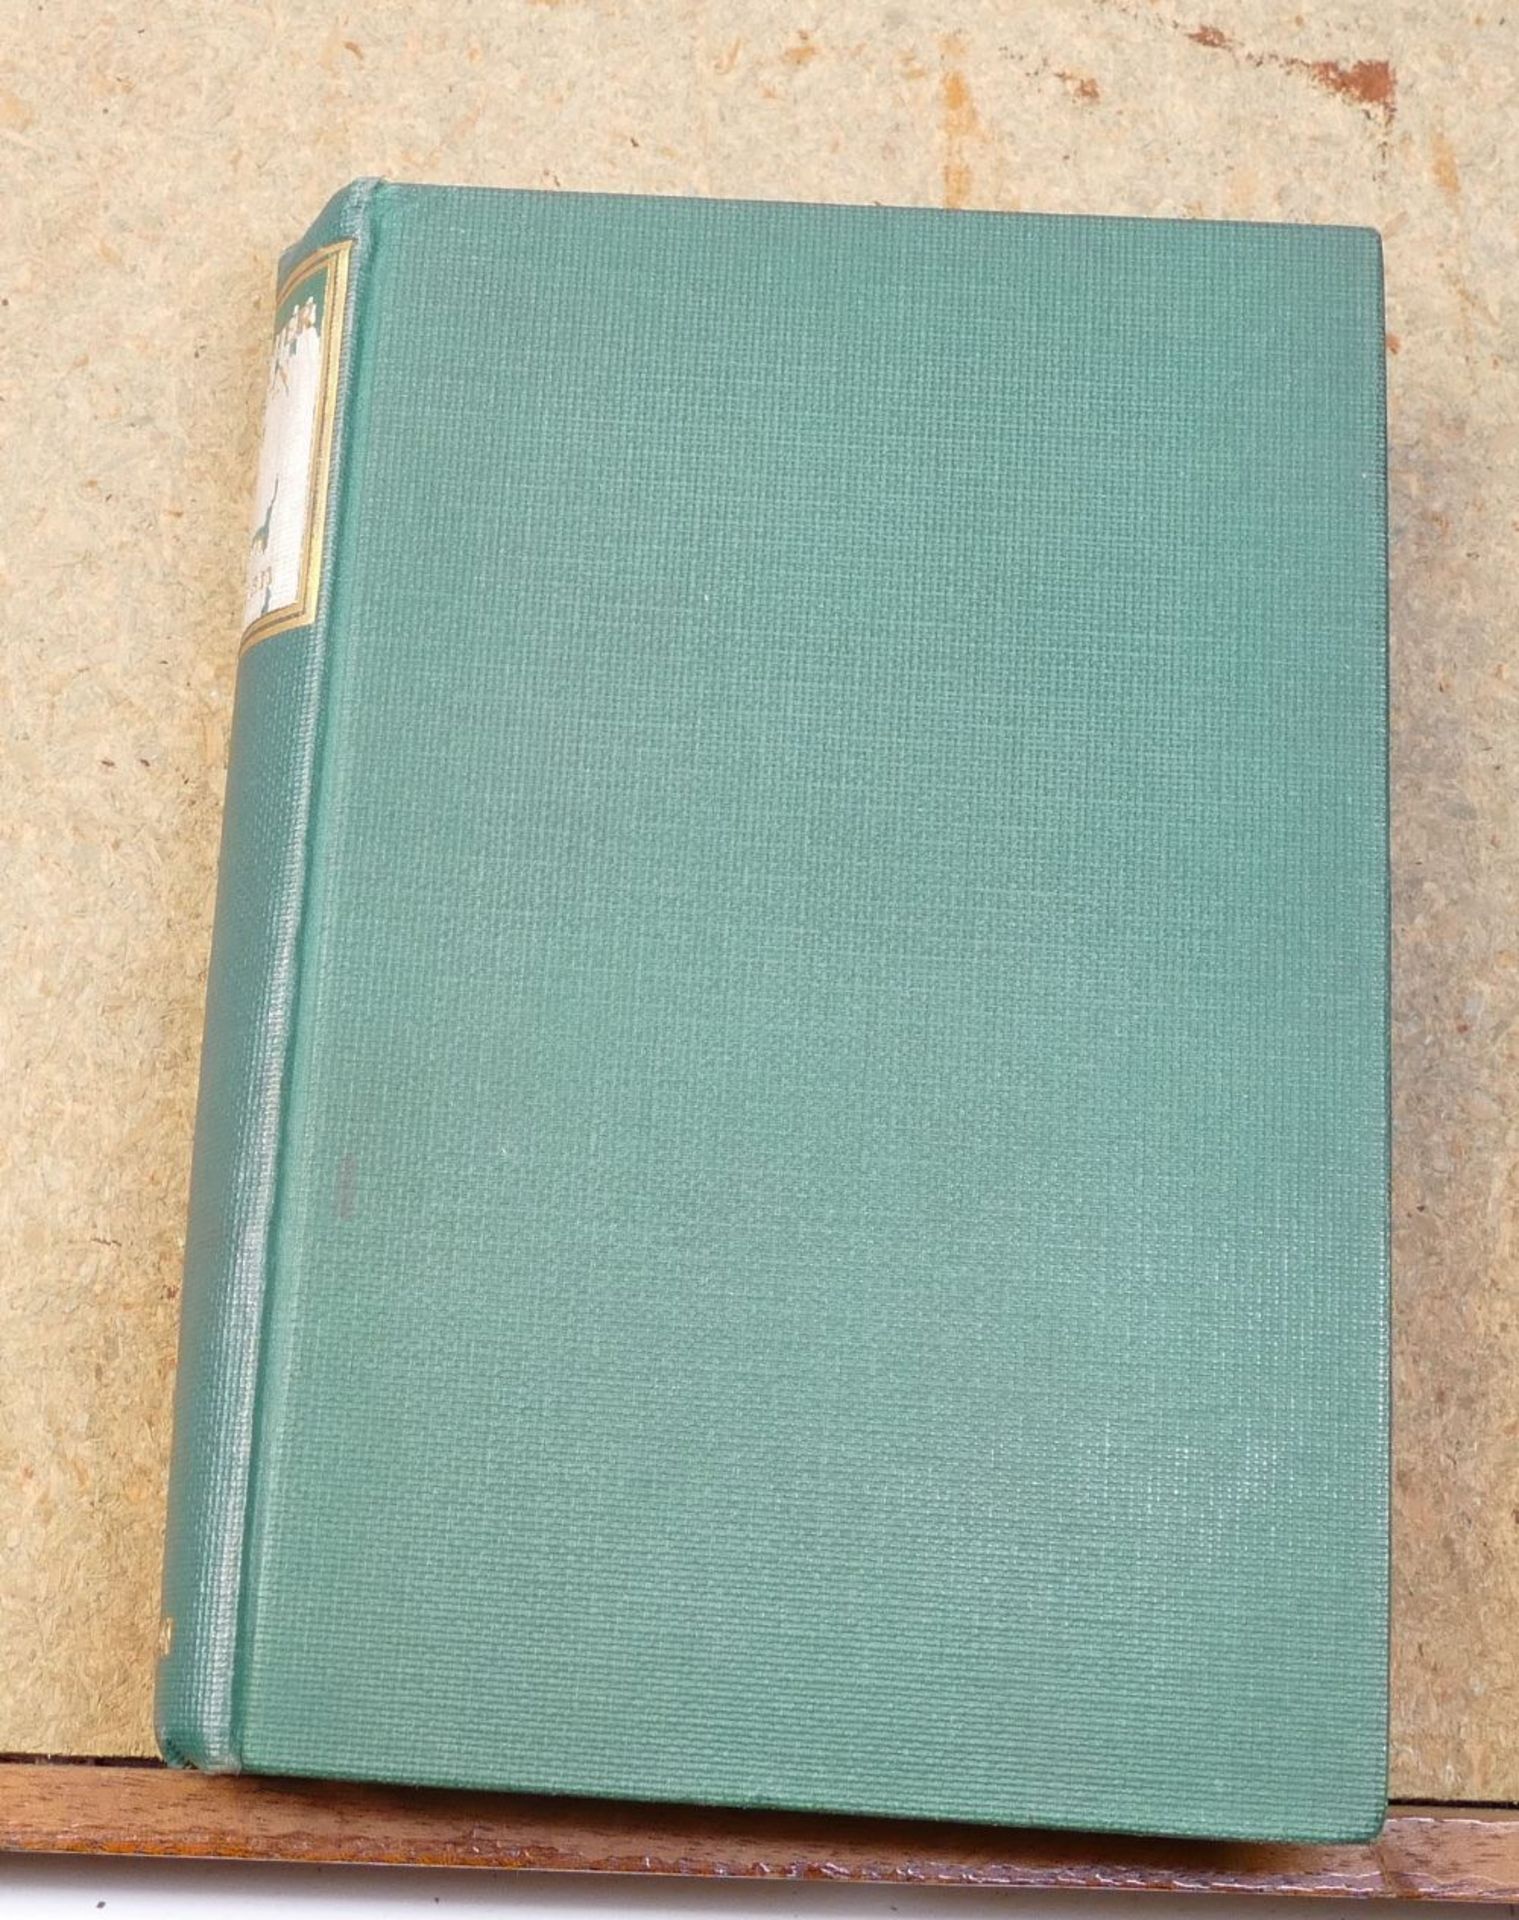 Six x 1st edition books by John Buchan - Sir Walter Scott 1932, Prester John 1910 (slight a/f), - Image 6 of 18